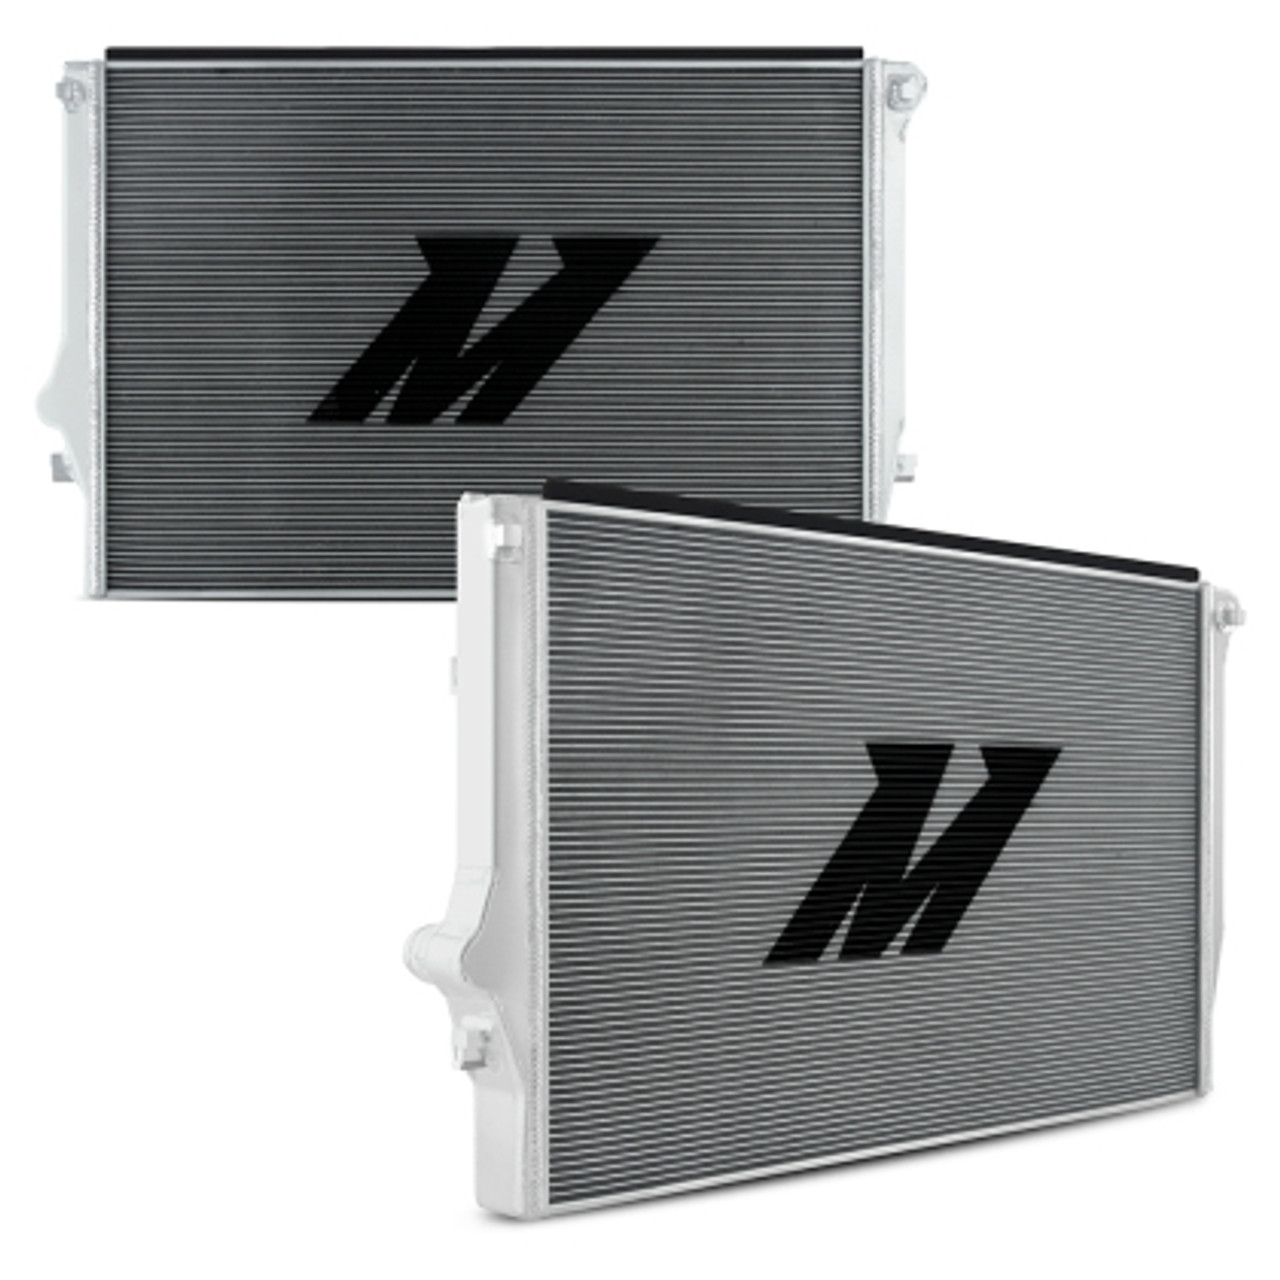 Mishimoto Performance Aluminum Radiator for MK7 Golf, GTI & Golf R